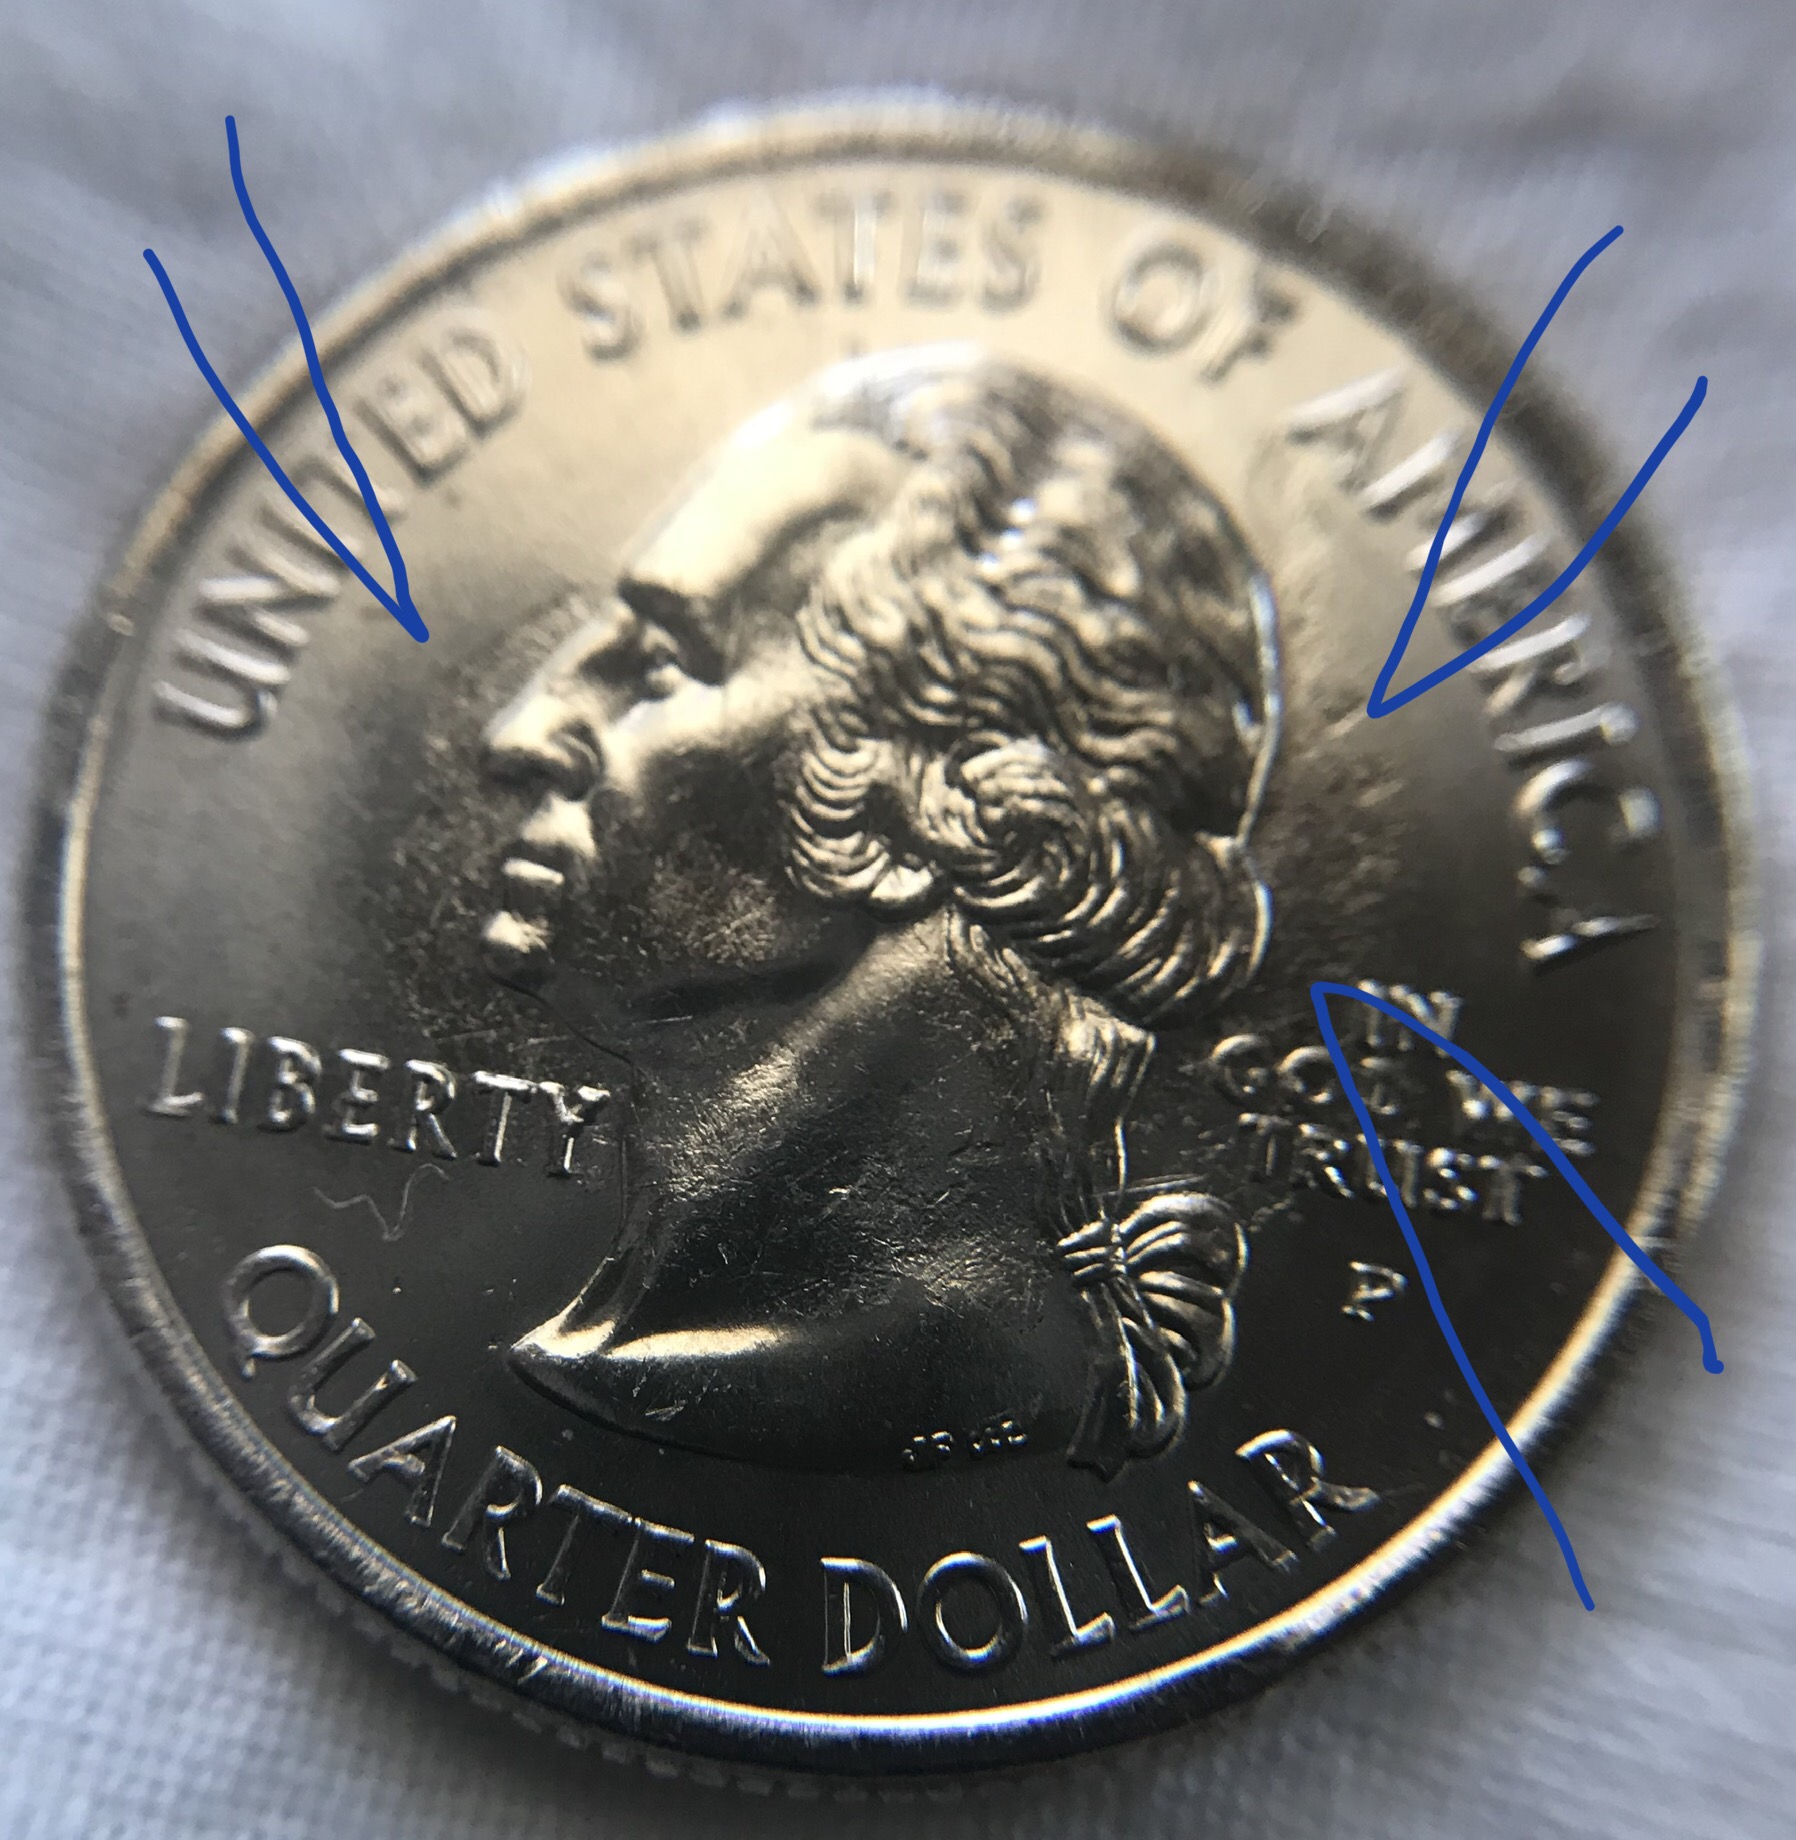 2004 P Texas Quarter - Error? | Coin Talk